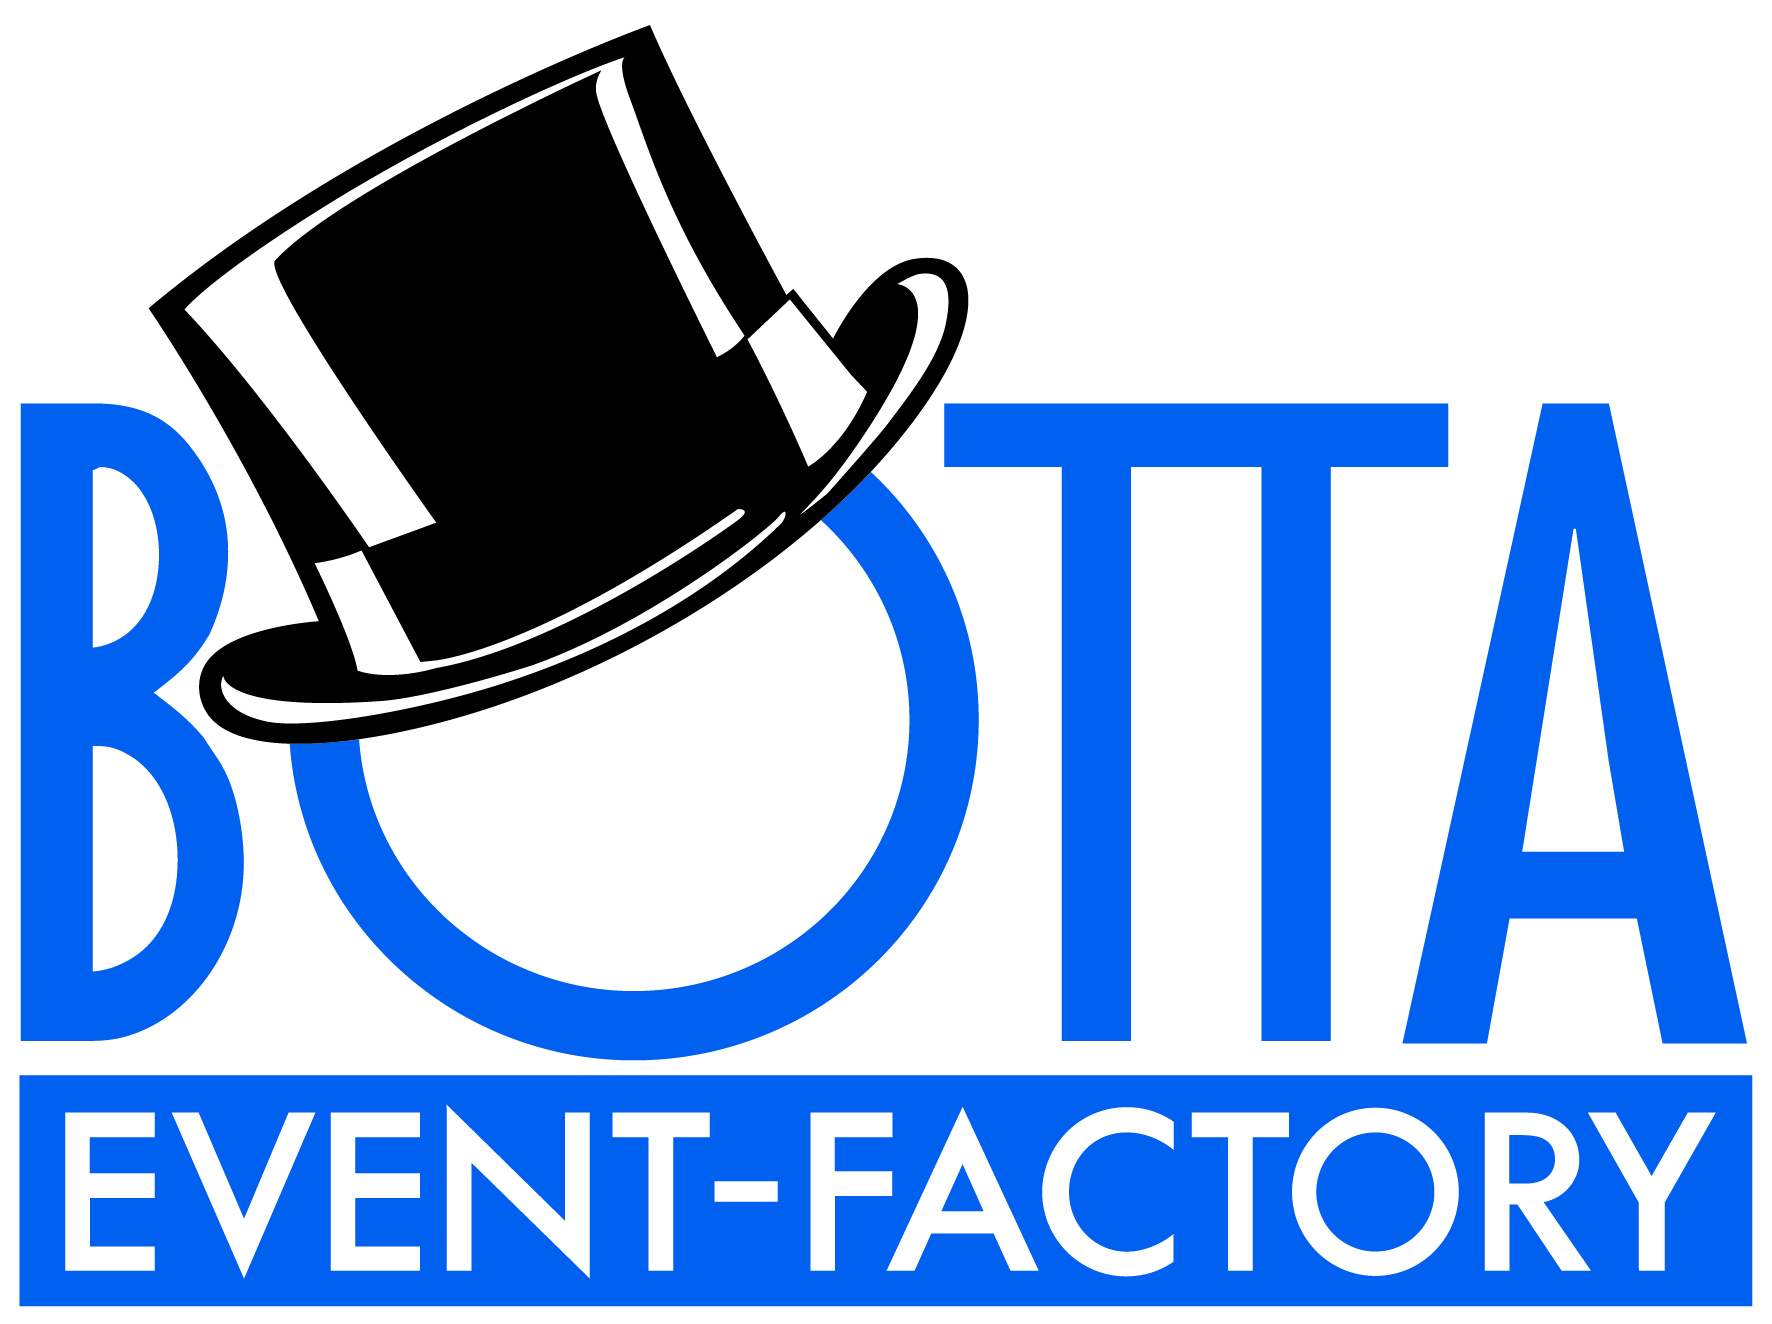 BOTTA EVENT-FACTORY